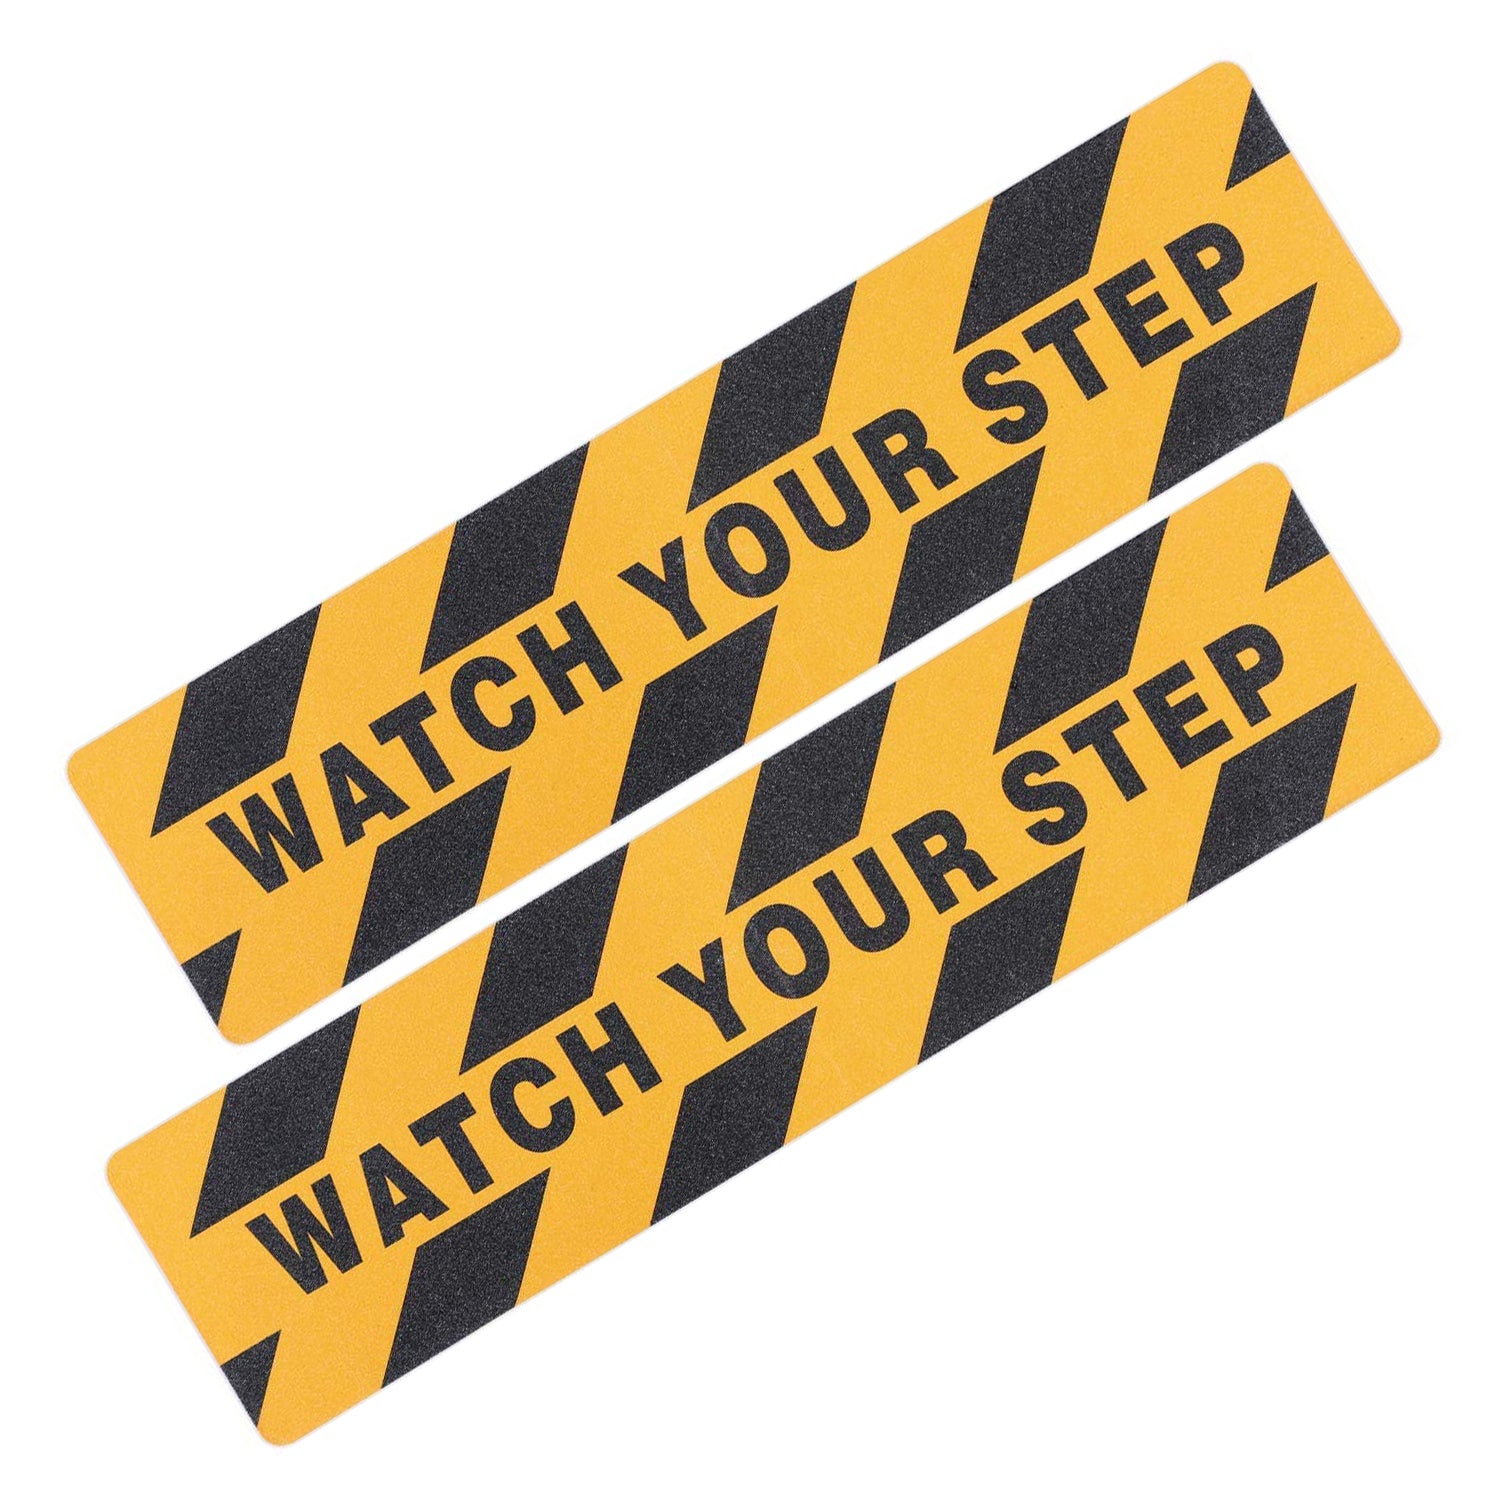 Self Adhesive Anti Slip/Anti Skid Strip. "WATCH YOUR STEPS" message LifeKrafts